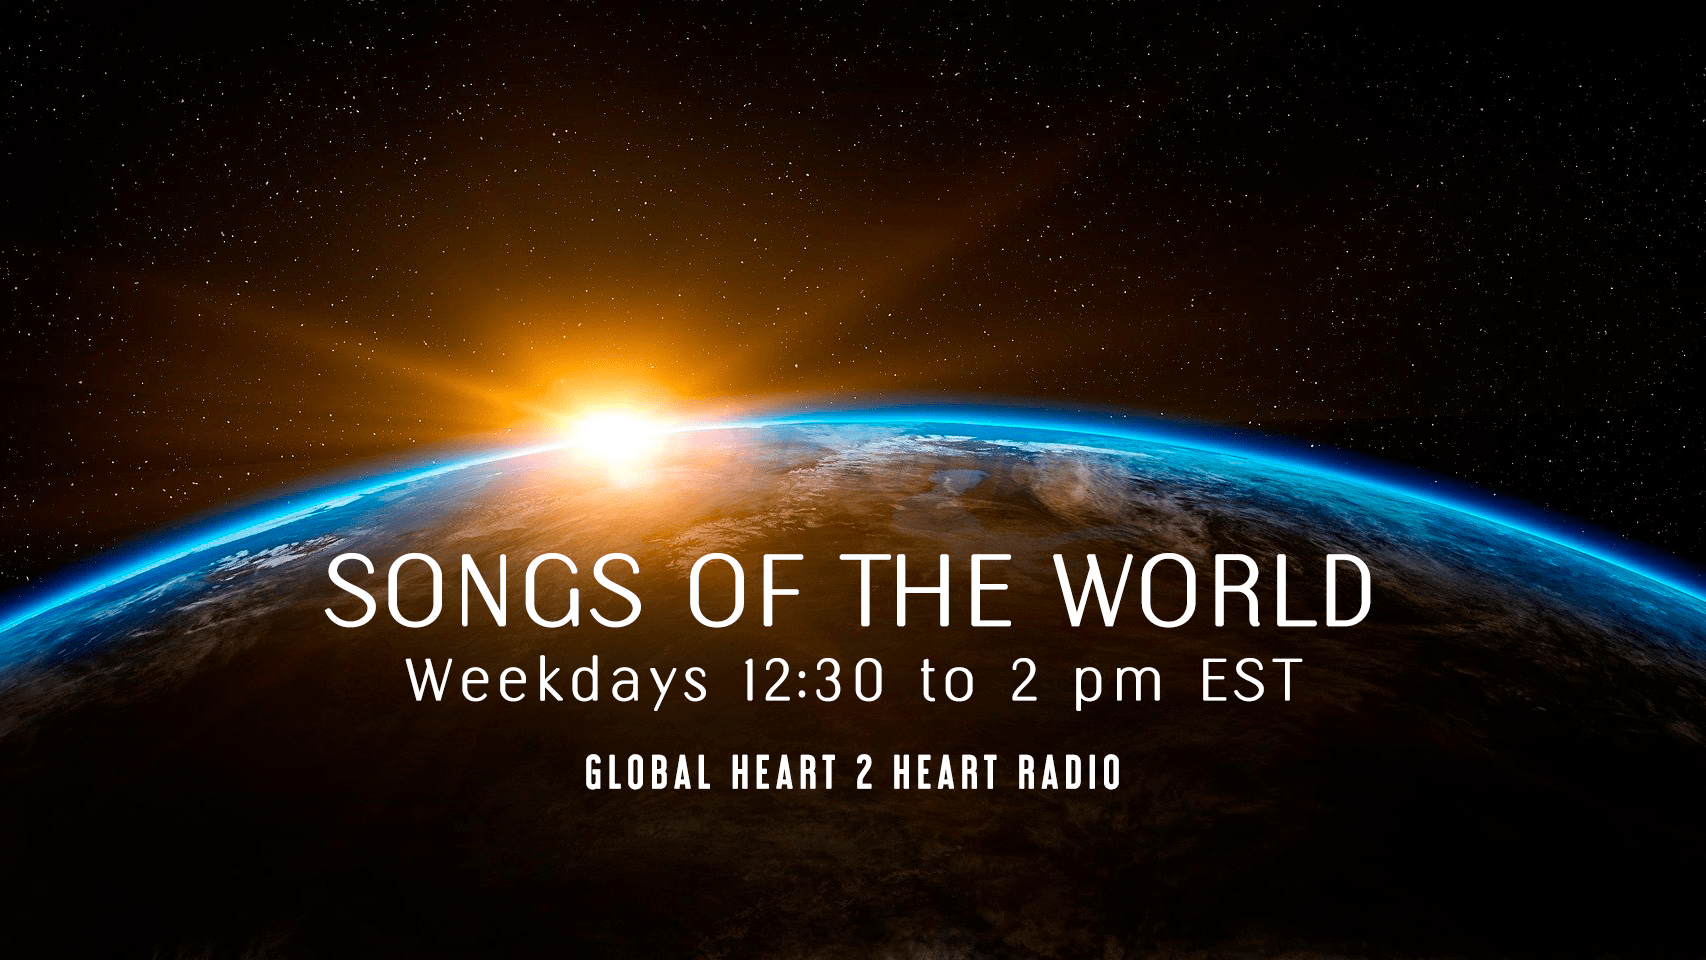 Songs of the World Music Global Heart 2 Heart Radio